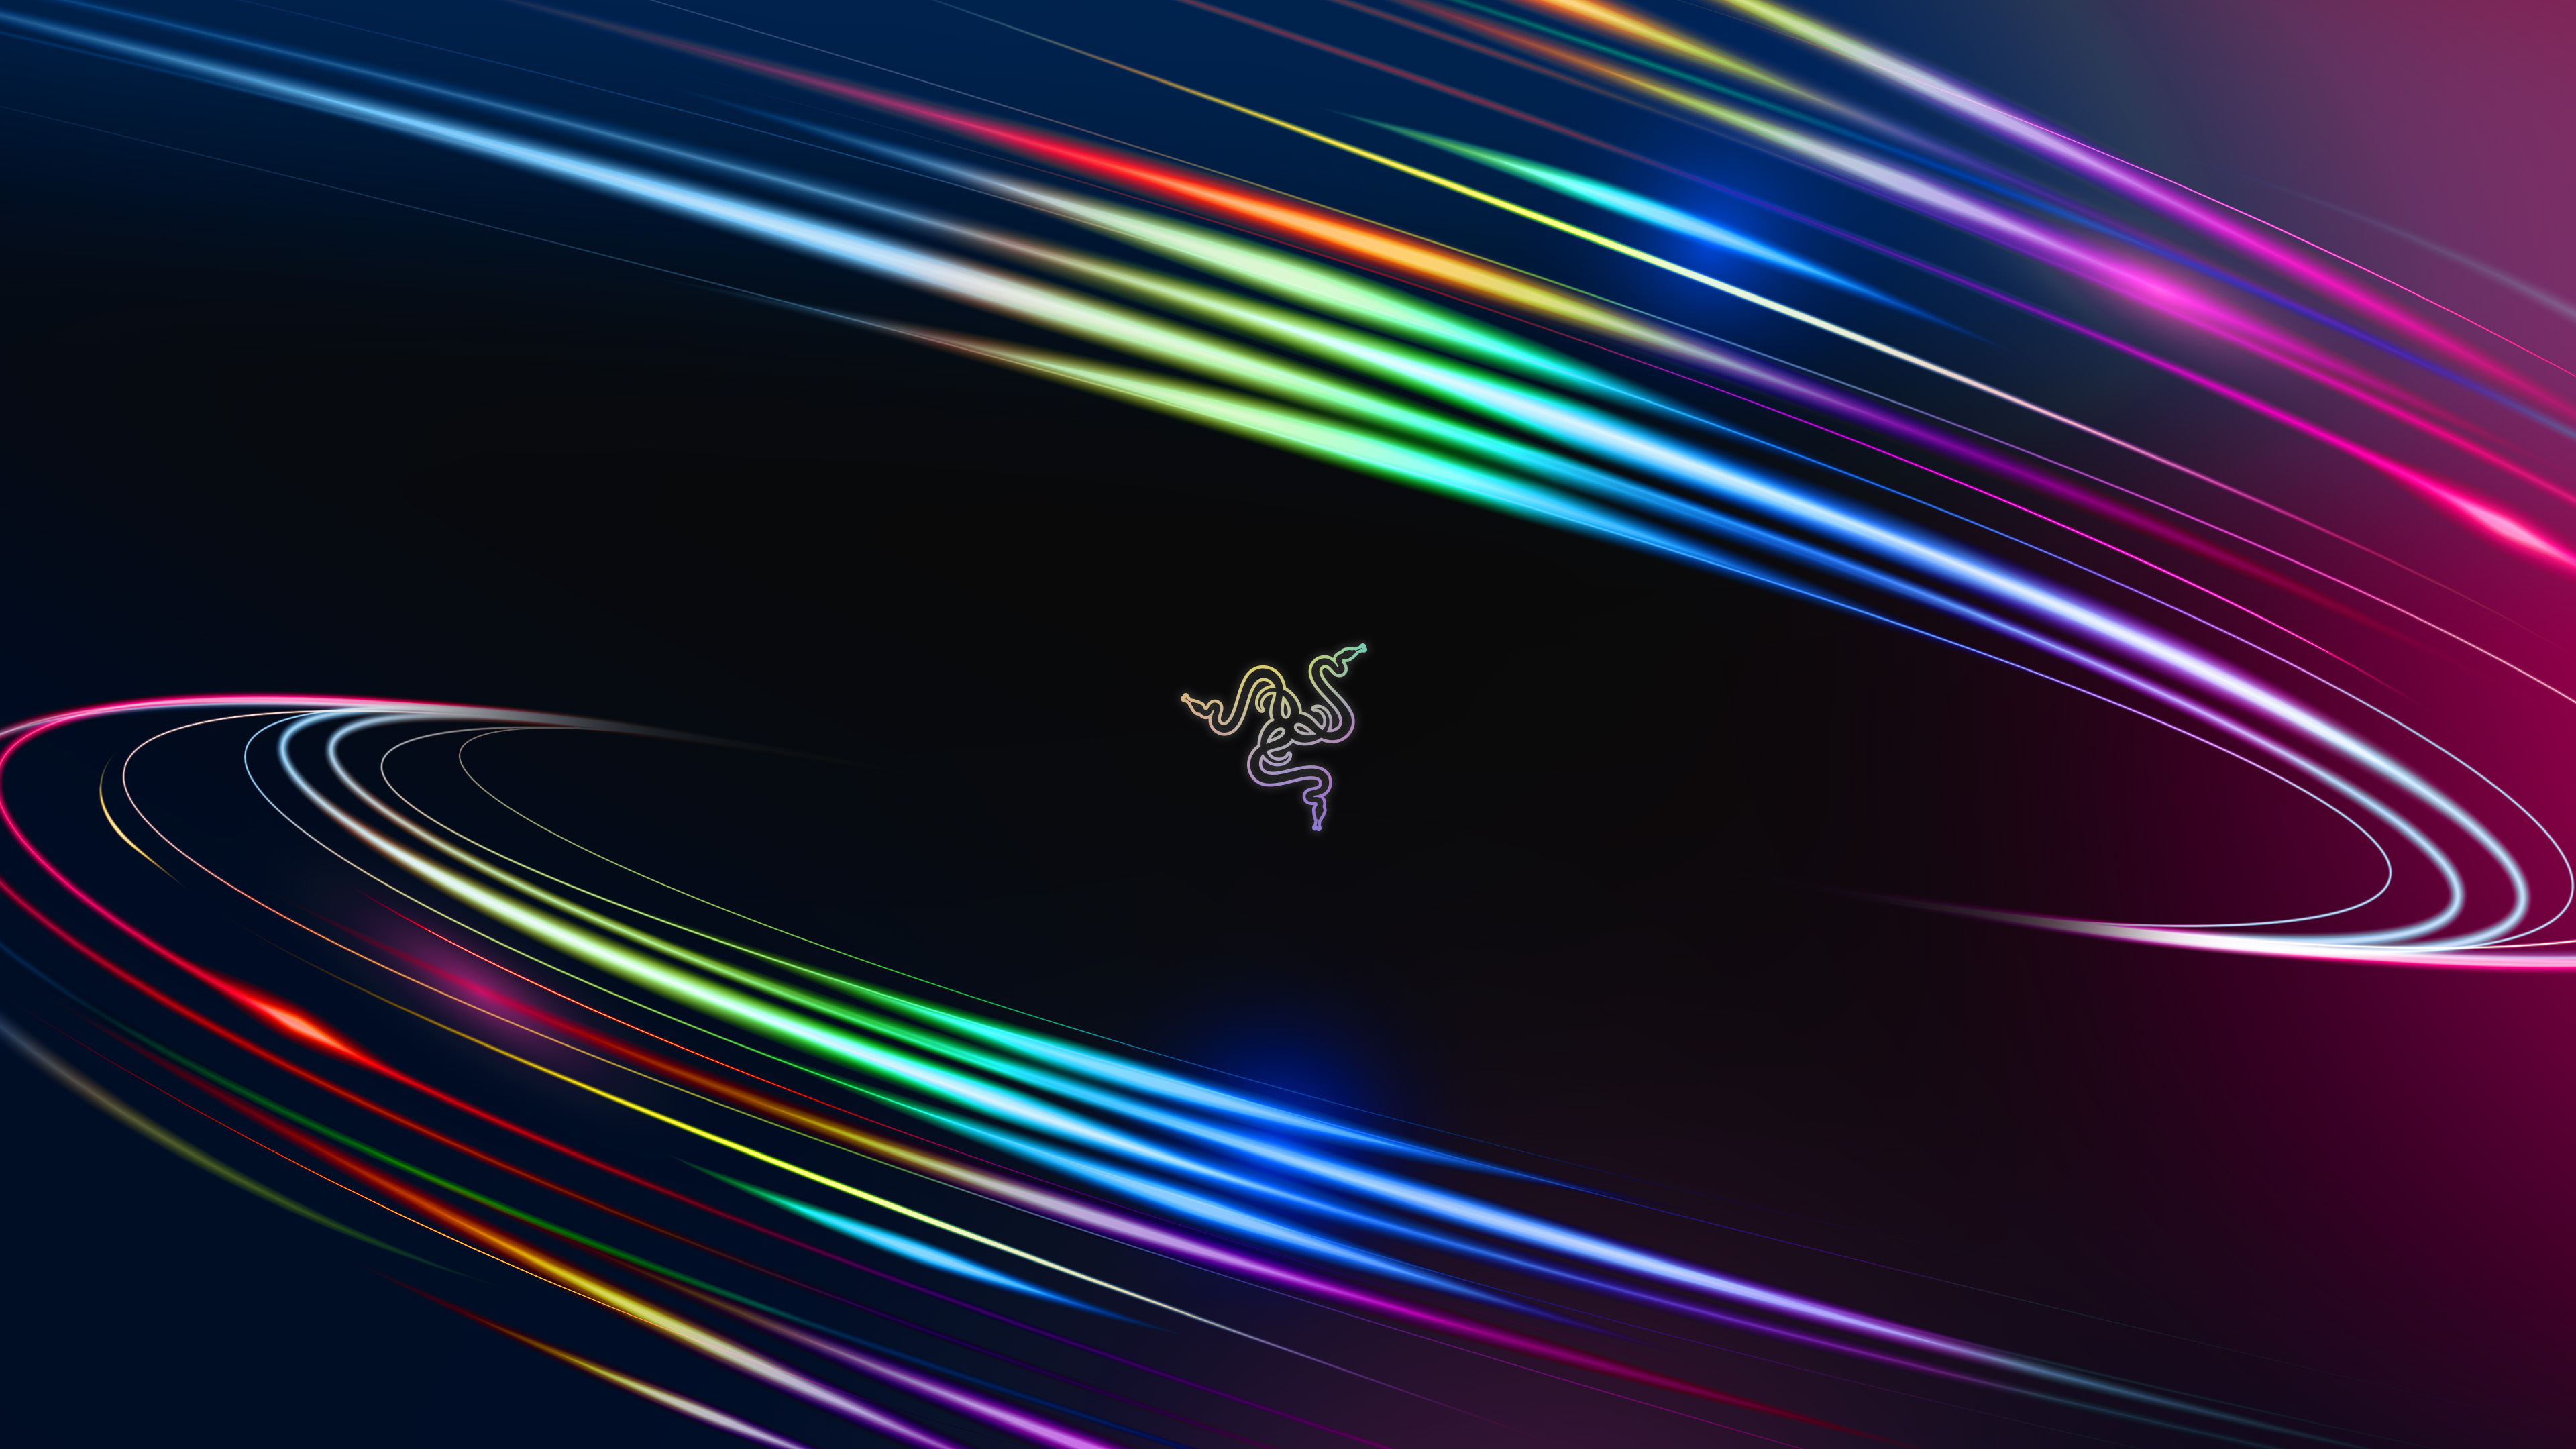 Vortex 4K Wallpaper, Waves, Spectrum, Razer, Colorful, Neon, Abstract